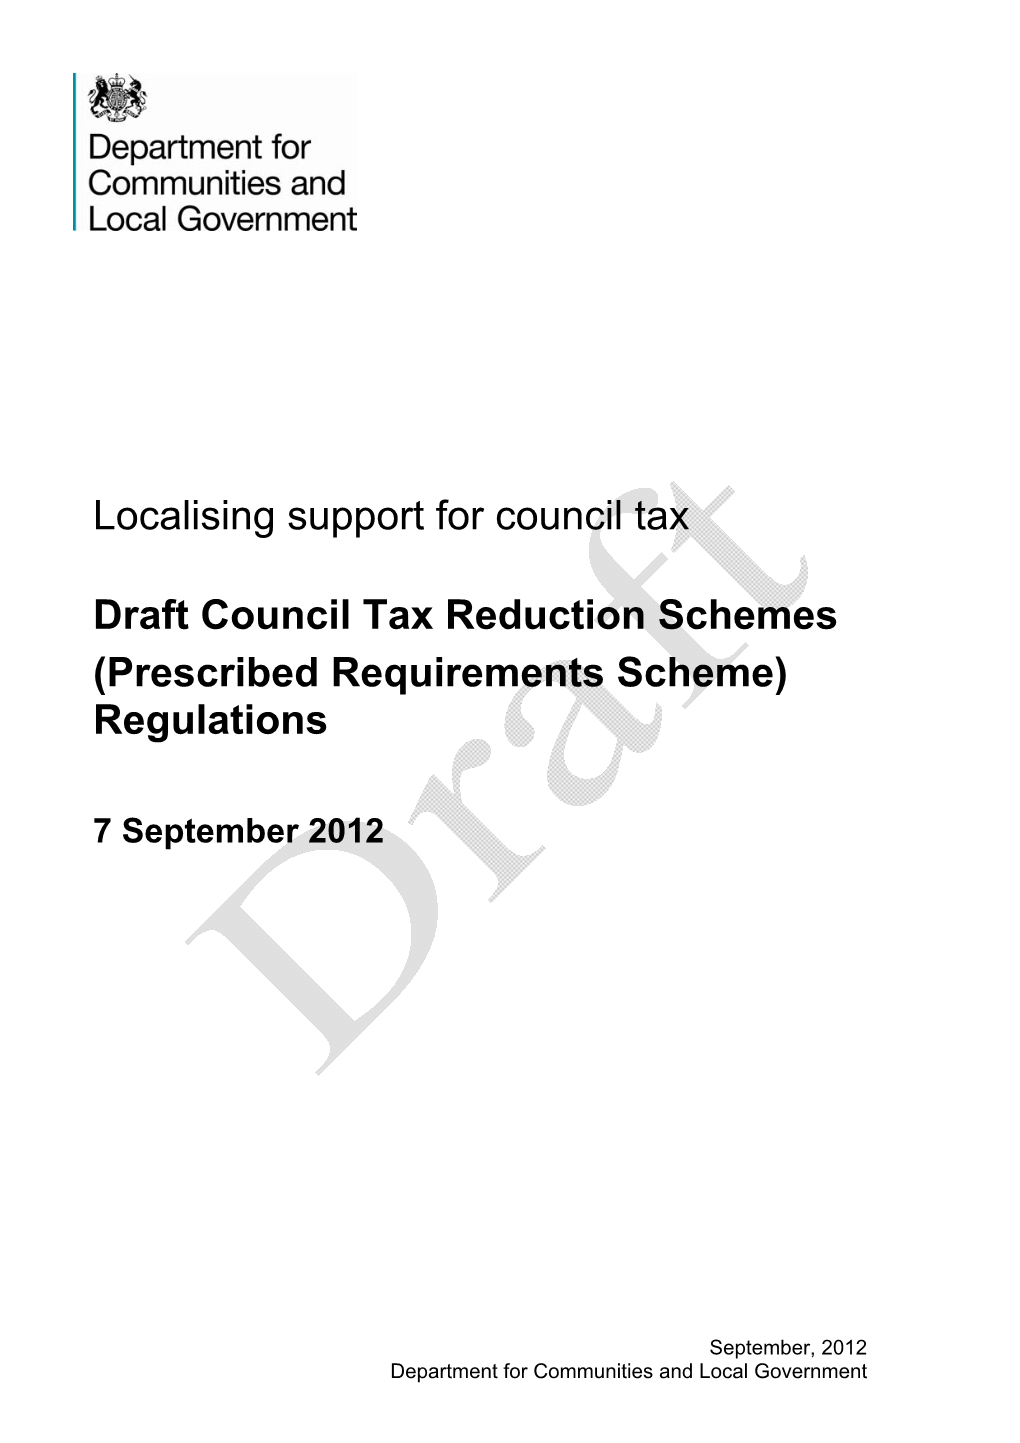 Draft Council Tax Reduction Schemes (Prescribed Requirements Scheme) Regulations